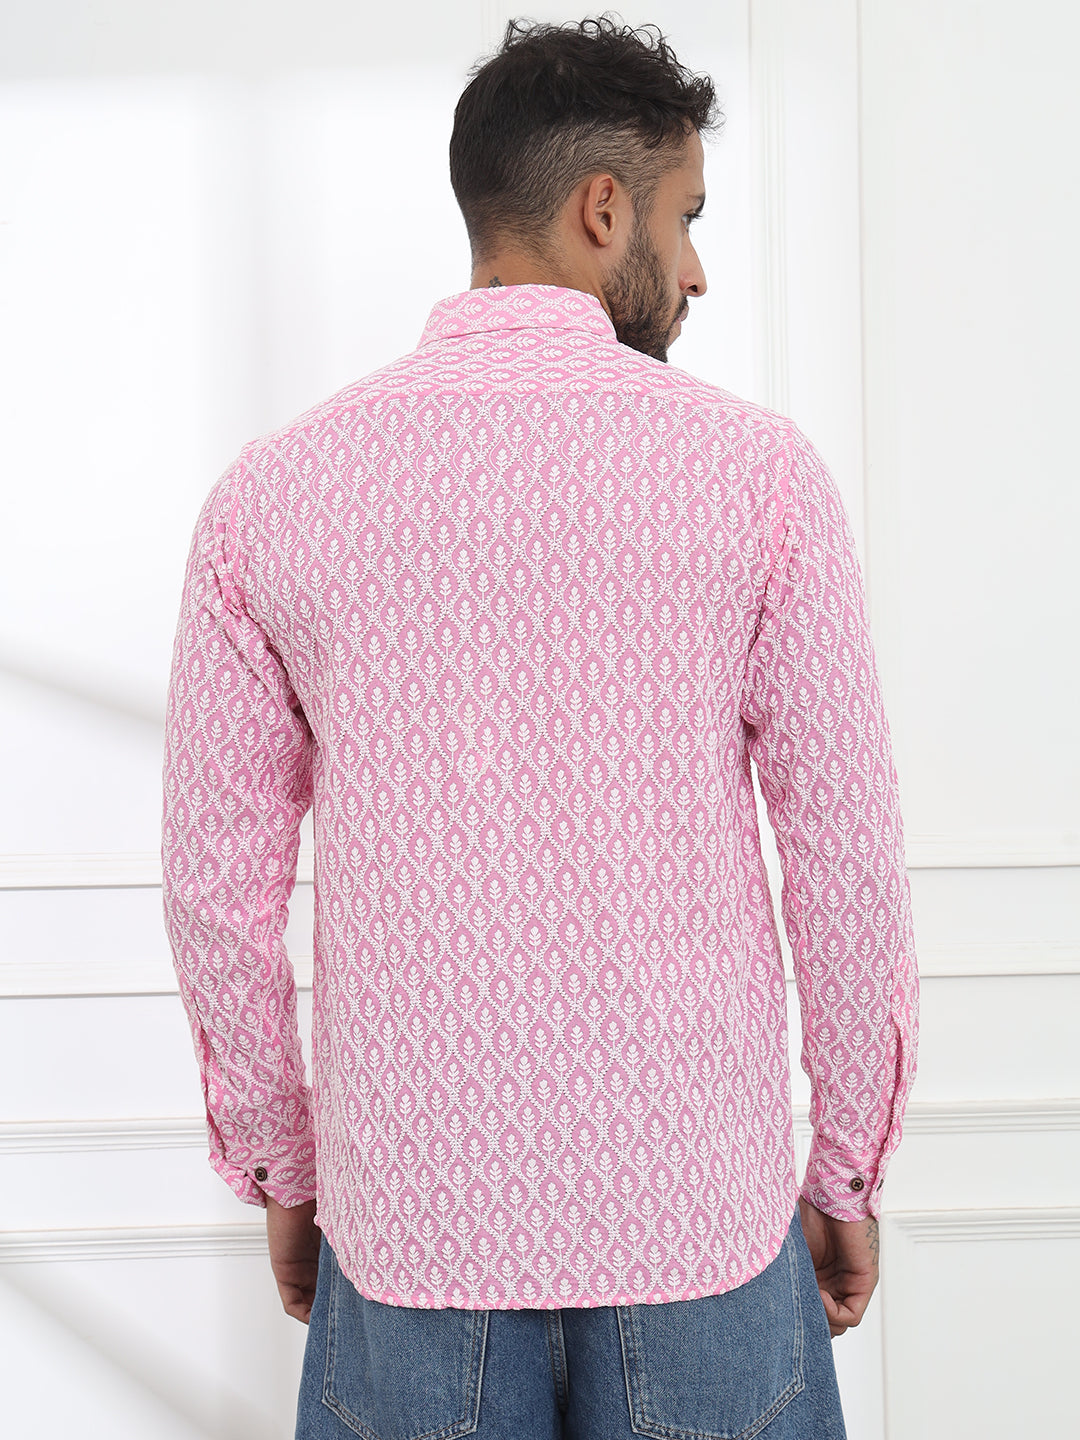 Firangi Yarn Super Soft Full Sleeves Chikankari schiffli Embroided Men